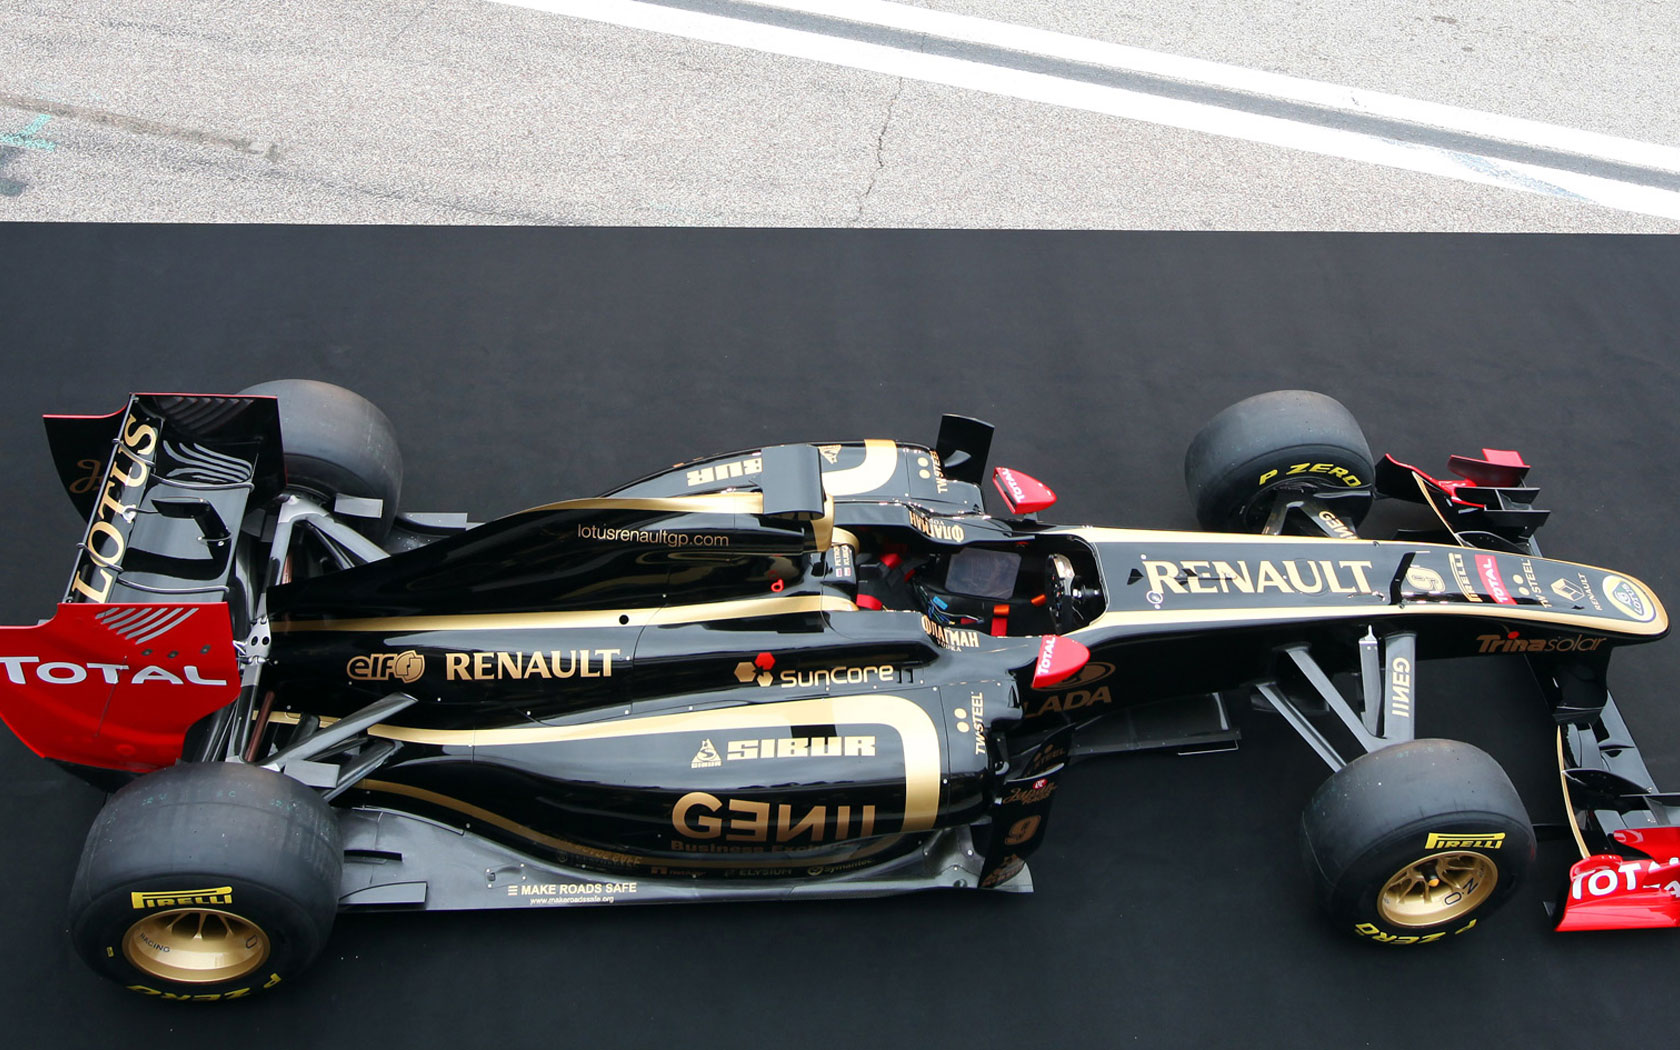 Lotus-Renault R31 2011 Formula 1 sports car racing on track.